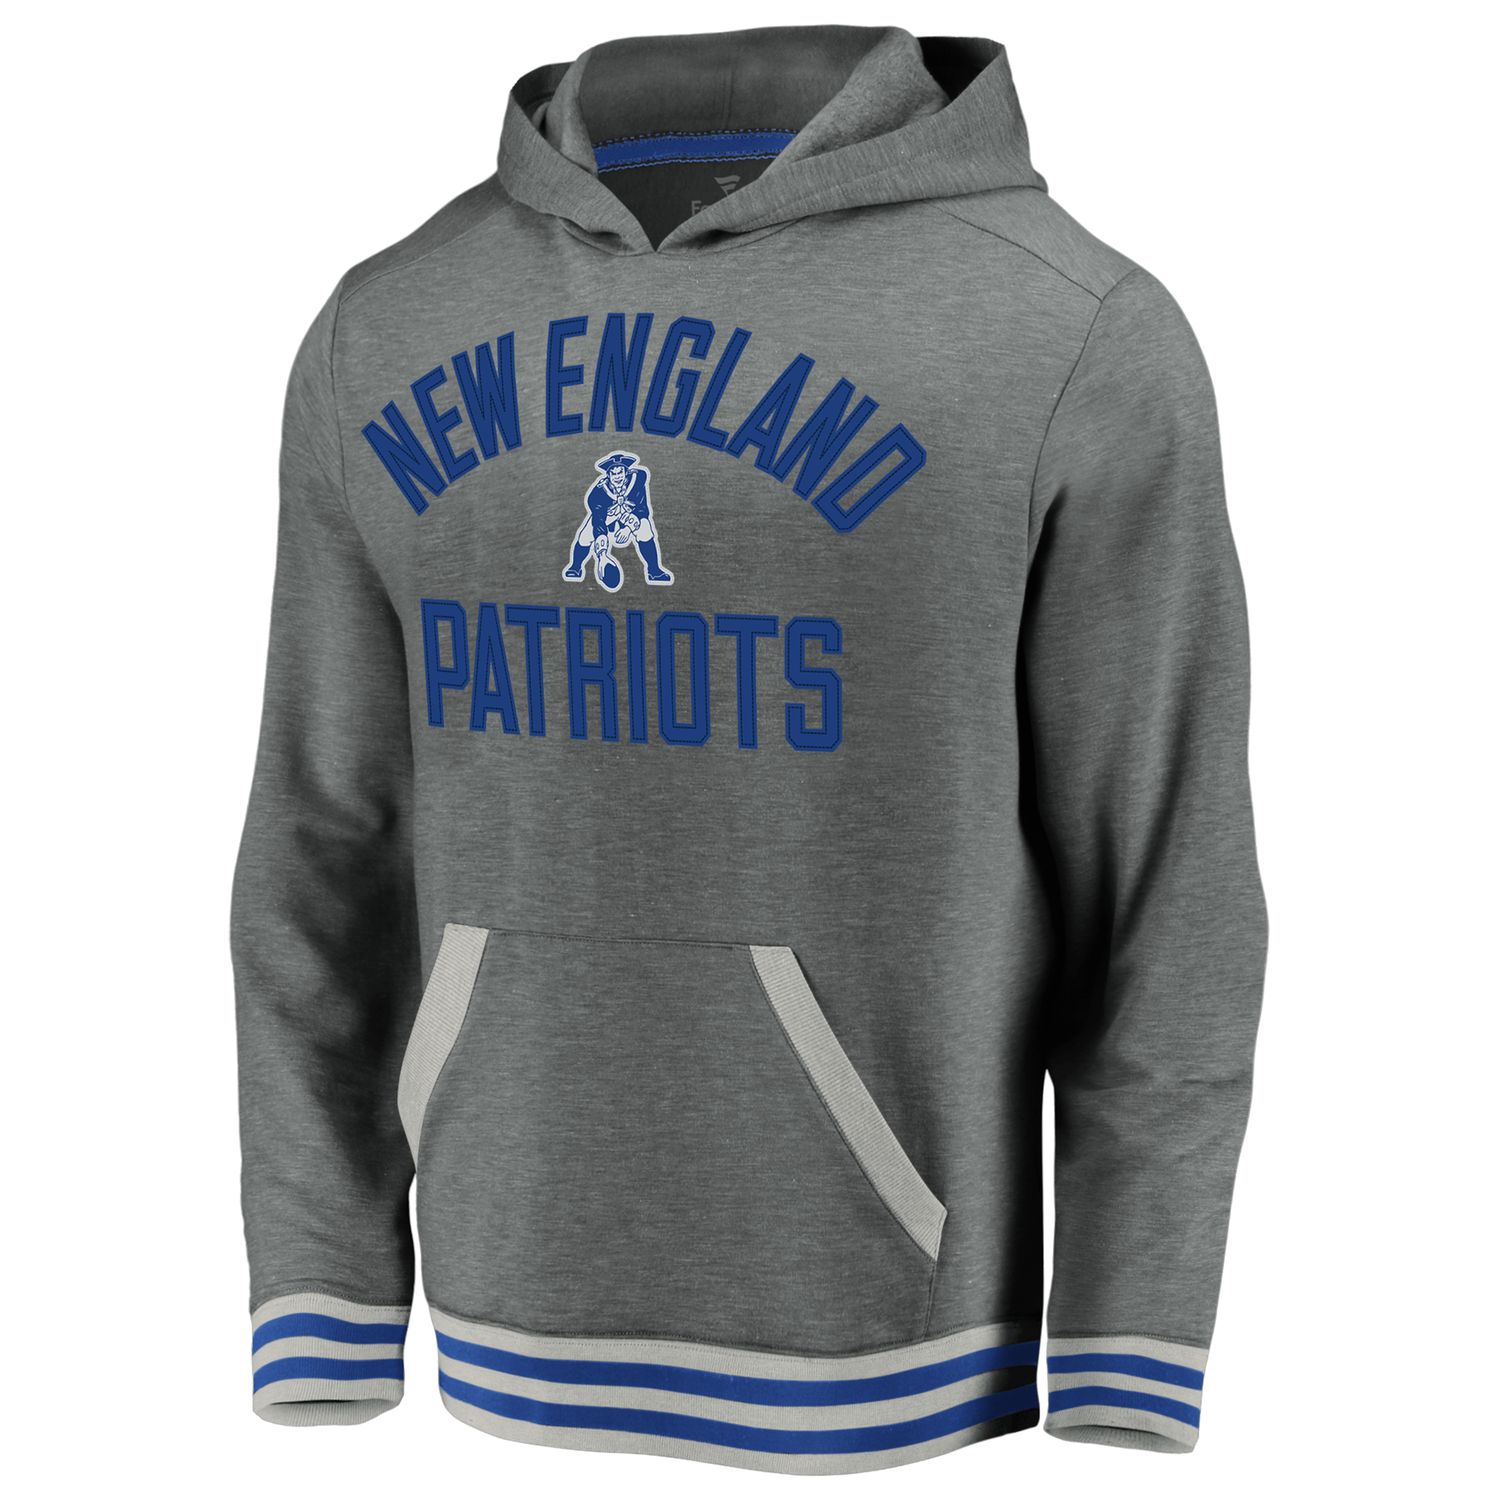 Mens NFL New England Patriots Vintage 